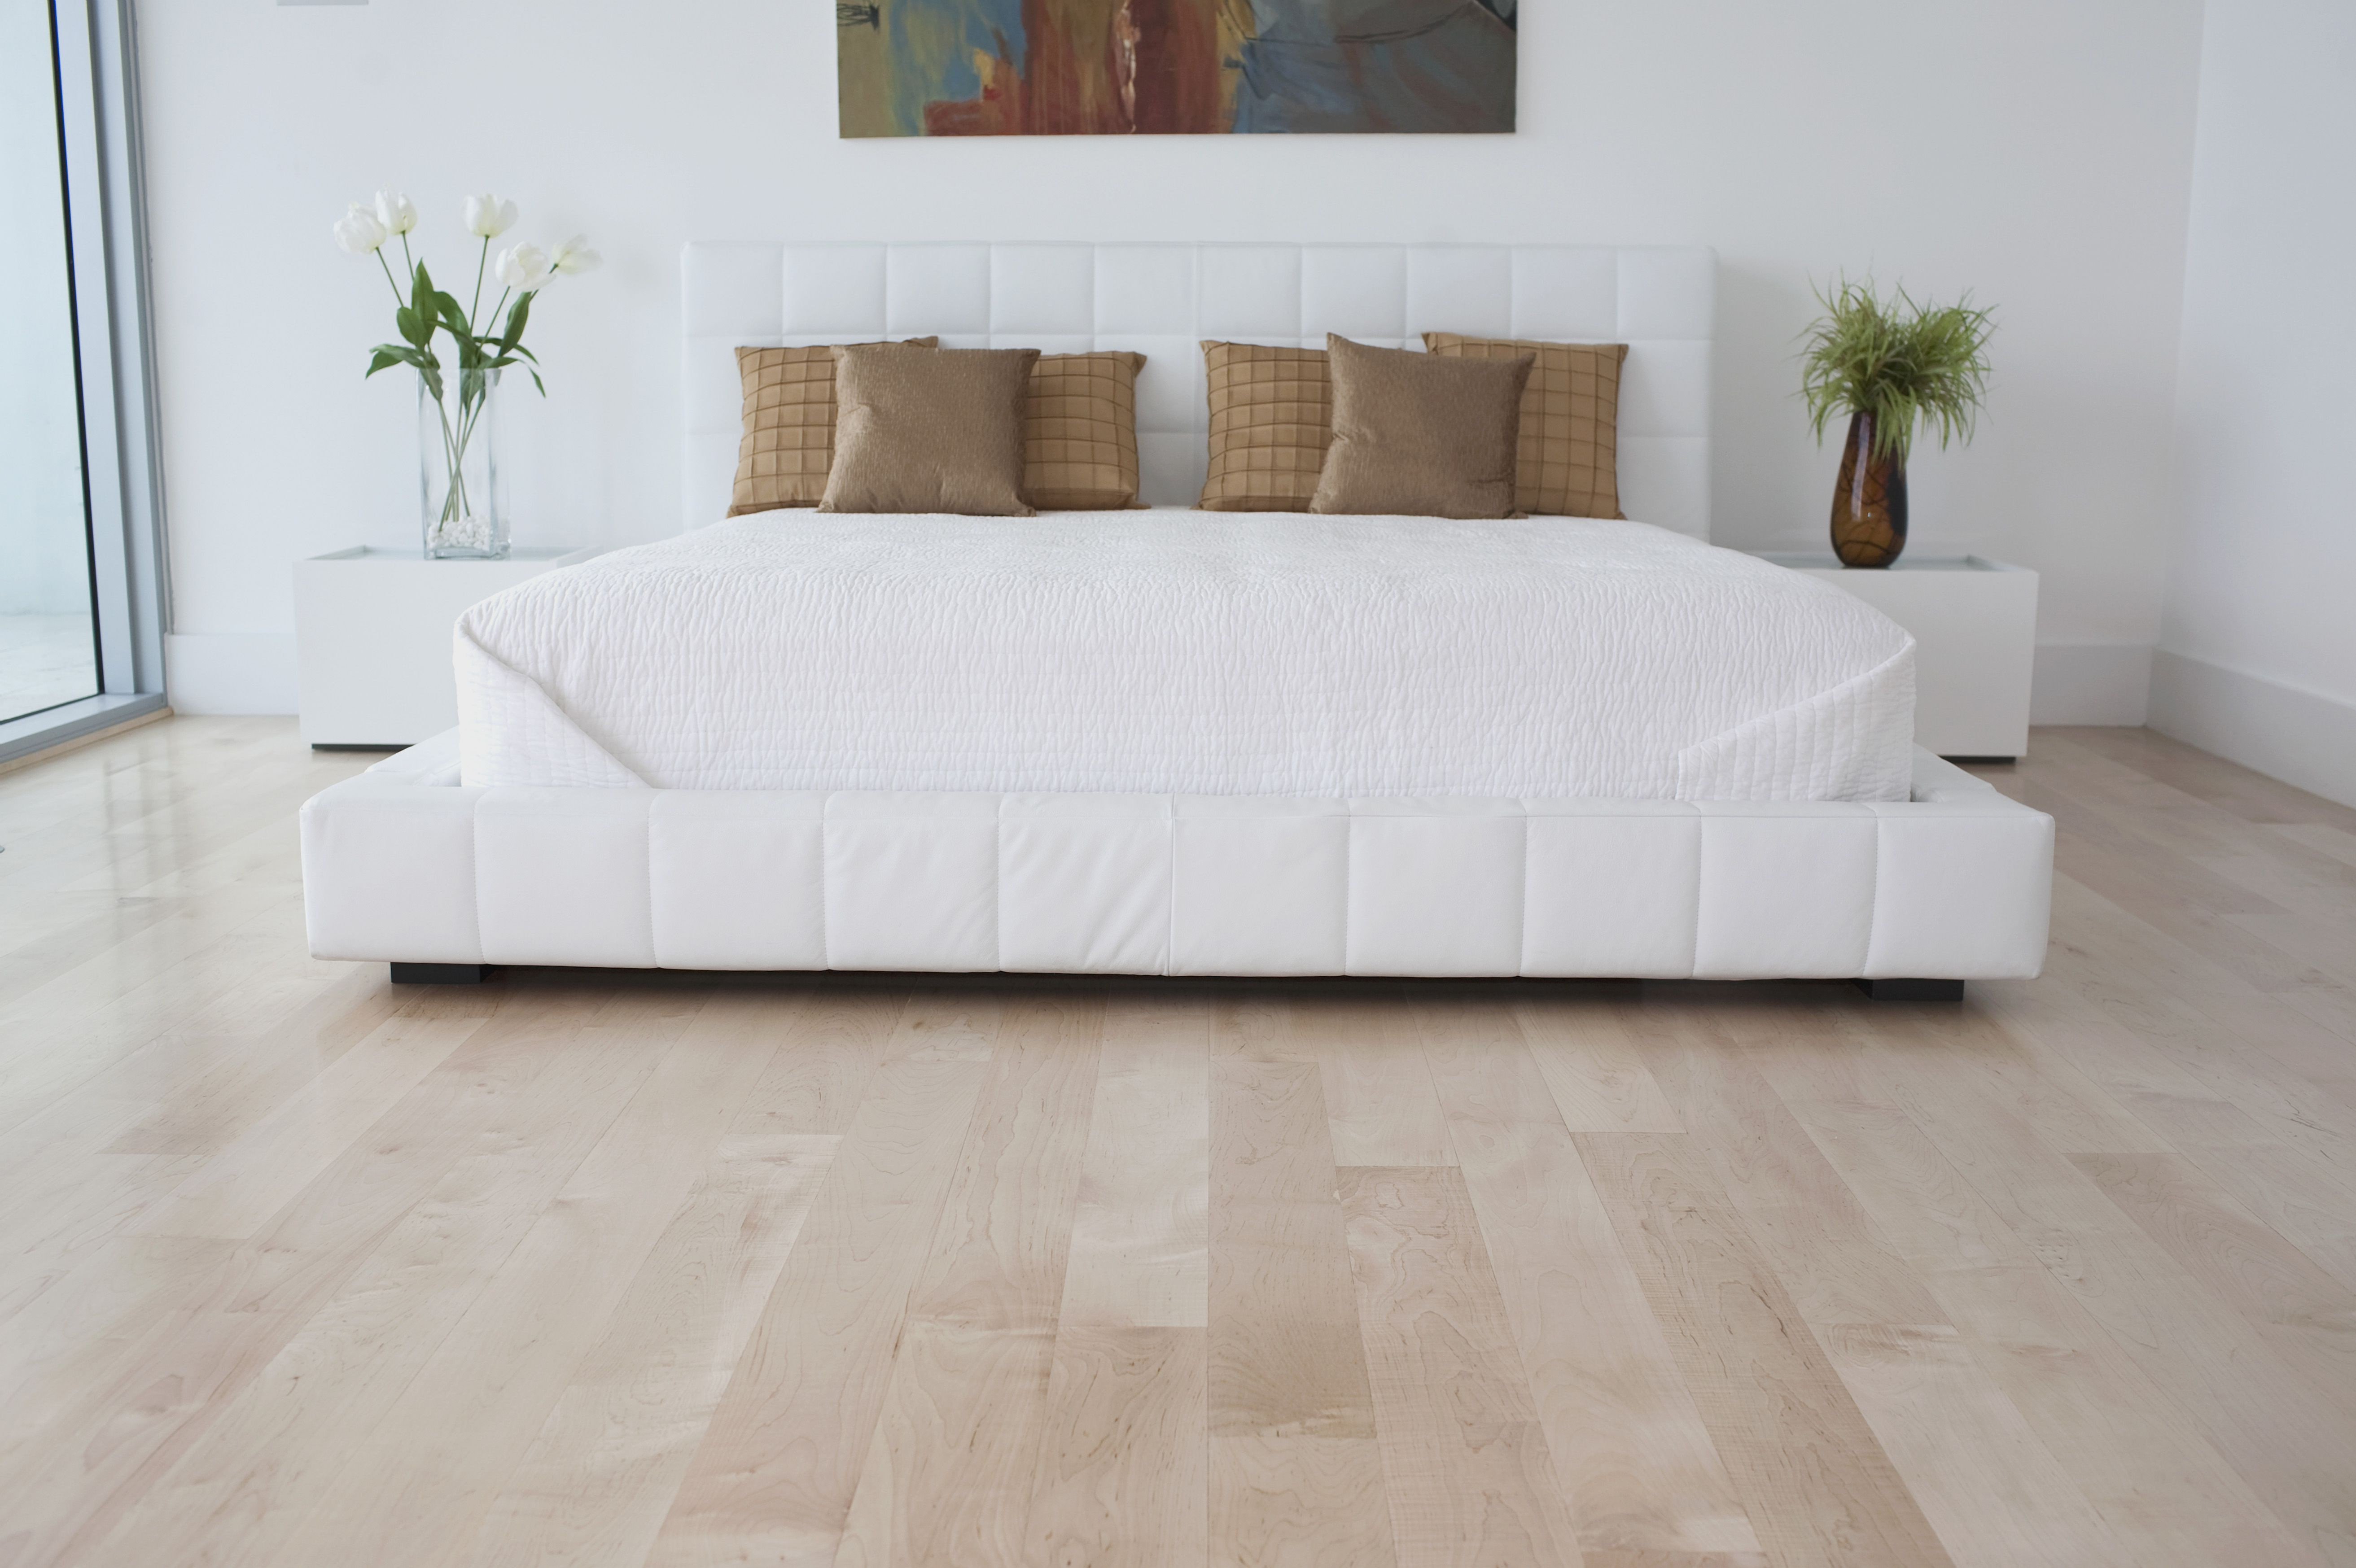 hardwood floors or carpet in bedrooms of 5 best bedroom flooring materials for interiors of a bedroom 126171674 57be063d3df78cc16e3cc6cf